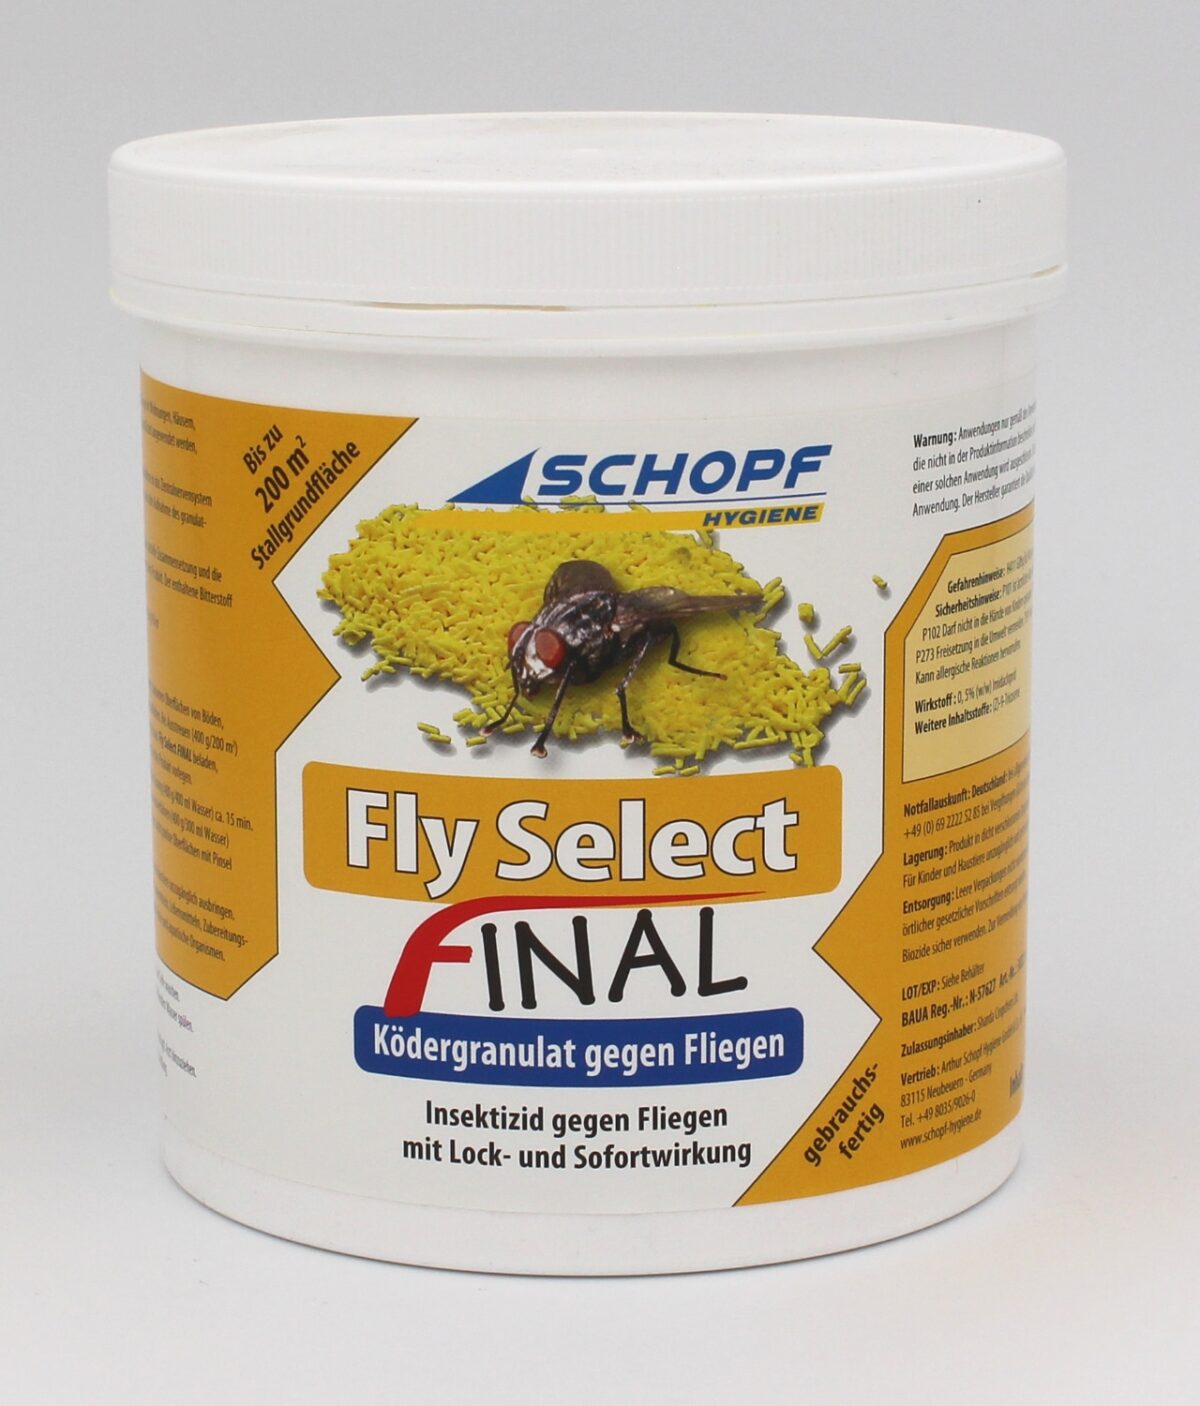 Fly select final Ködergranulat. Schopf Hygiene